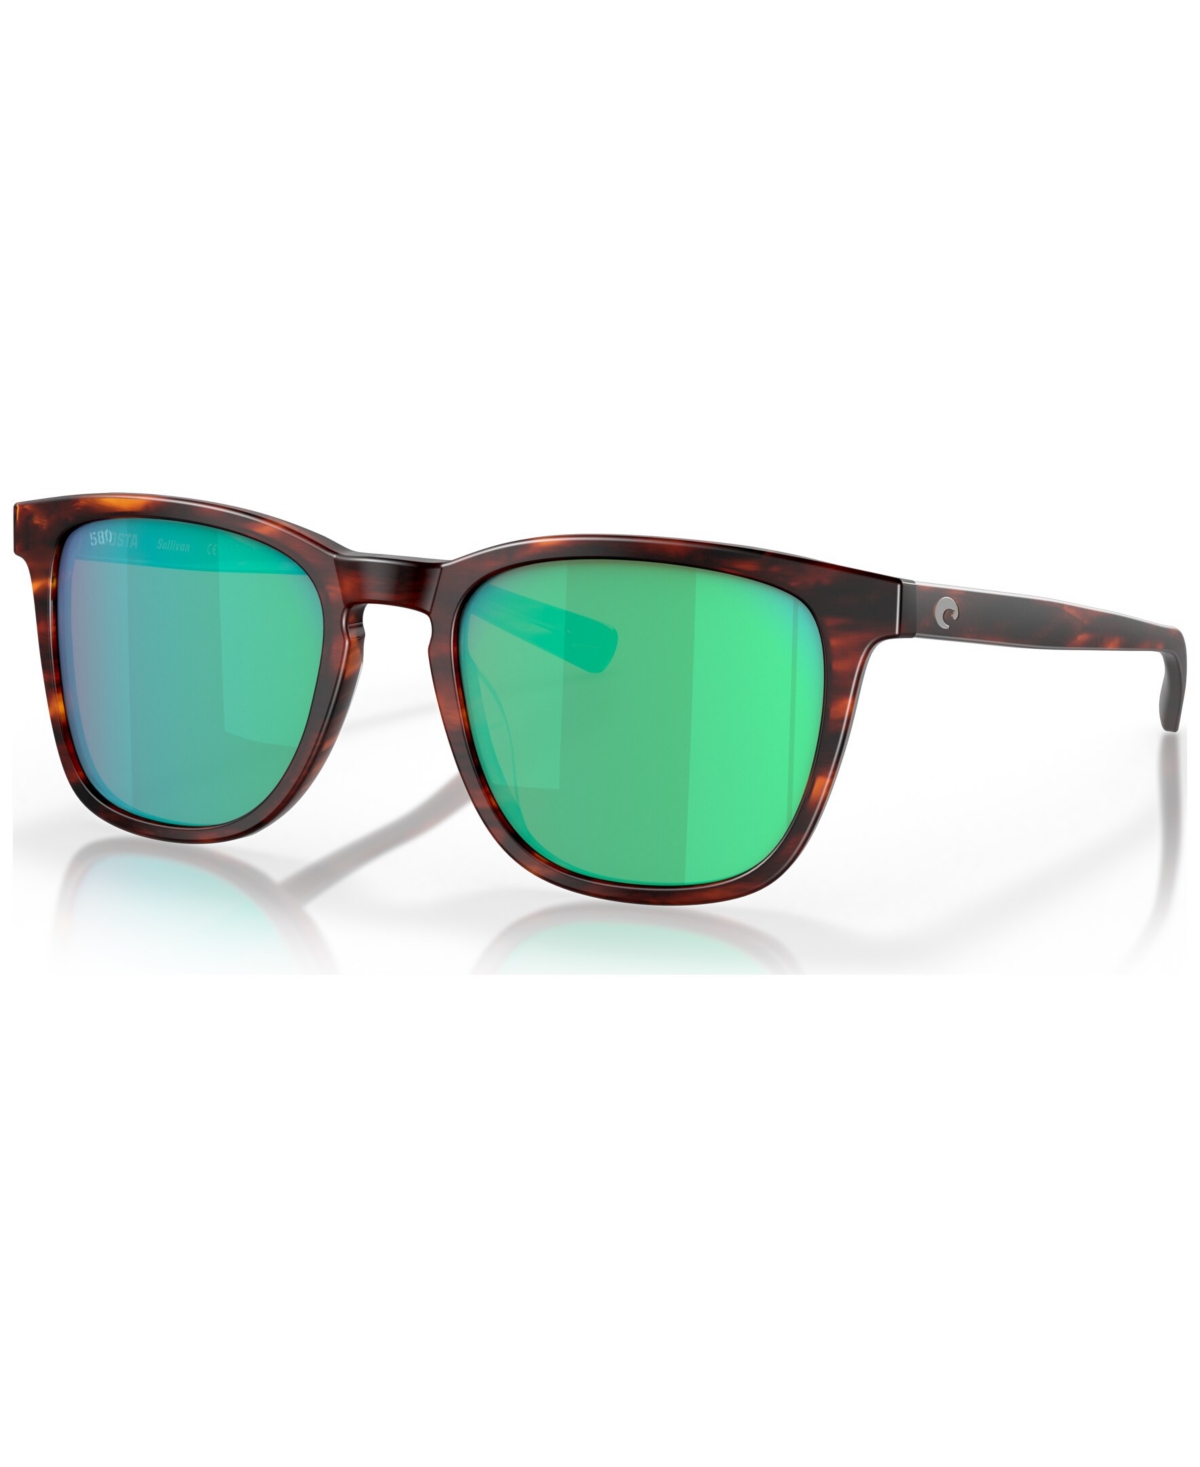 Unisex Polarized Sunglasses, Sullivan - Matte Tortoise